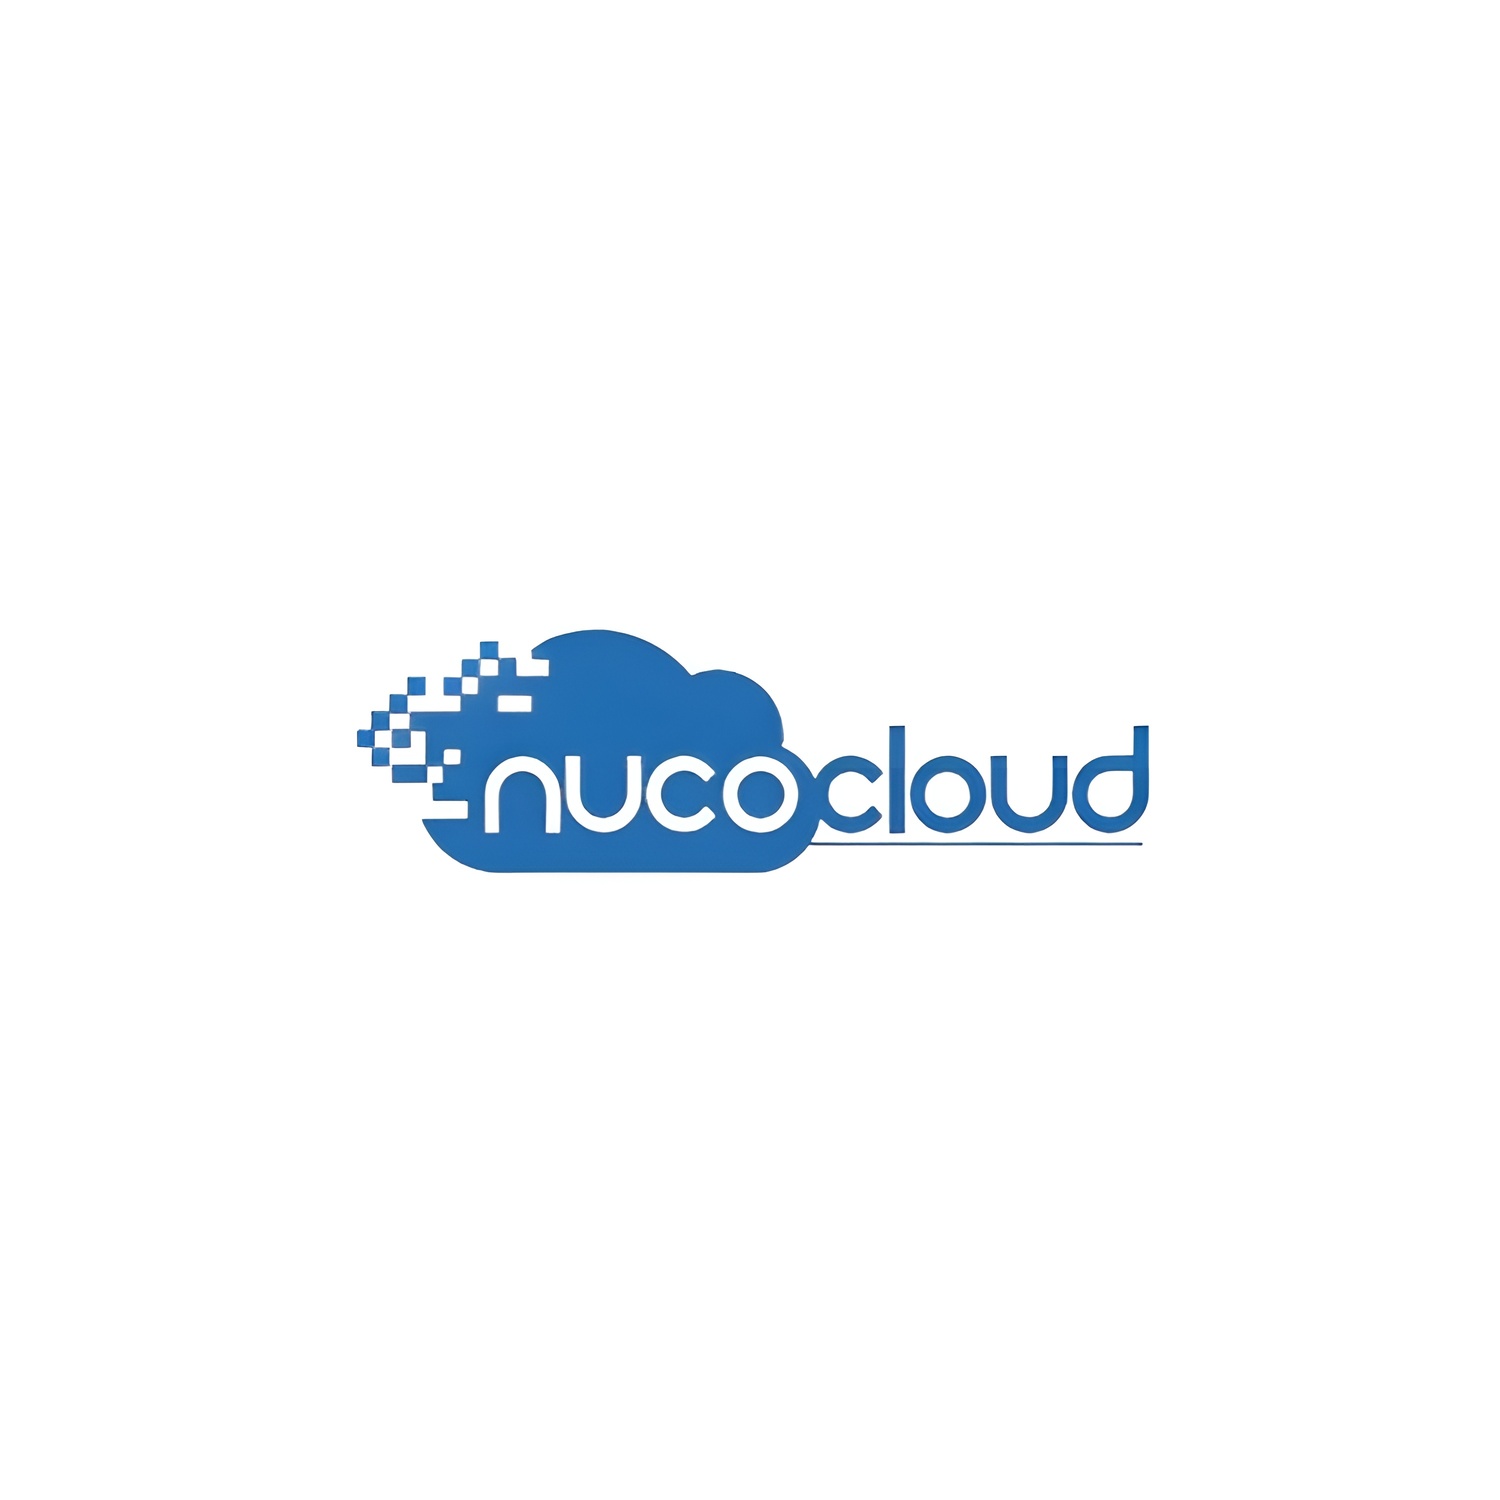 Nuco.cloud立志成为计算能力的“Airbnb”